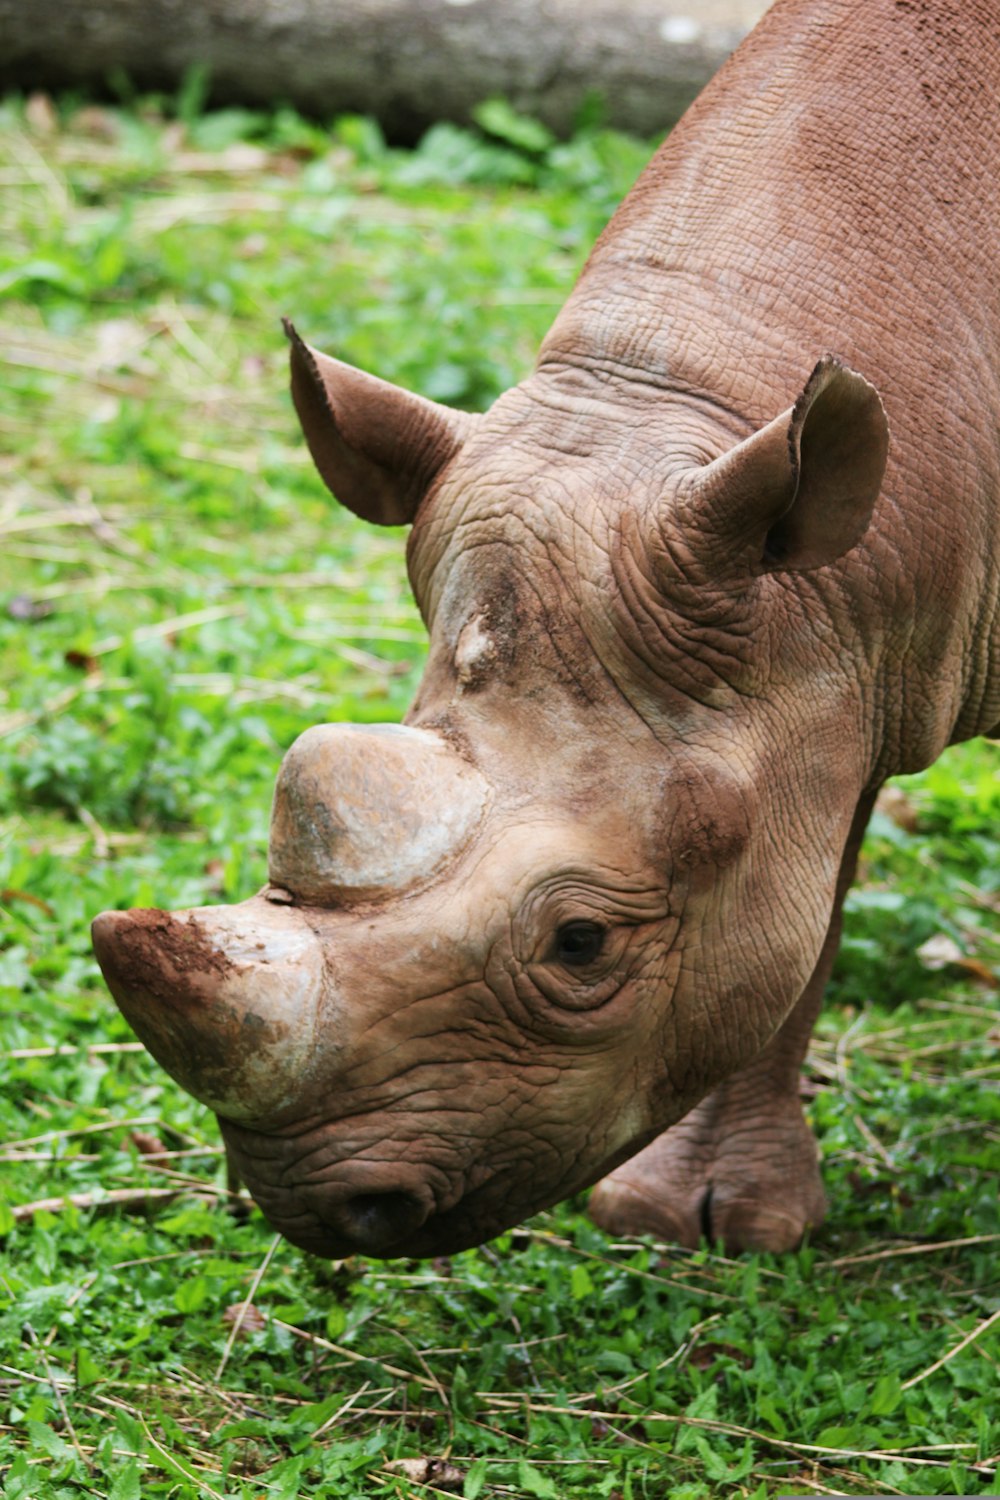 a close up of a rhino grazing on grass